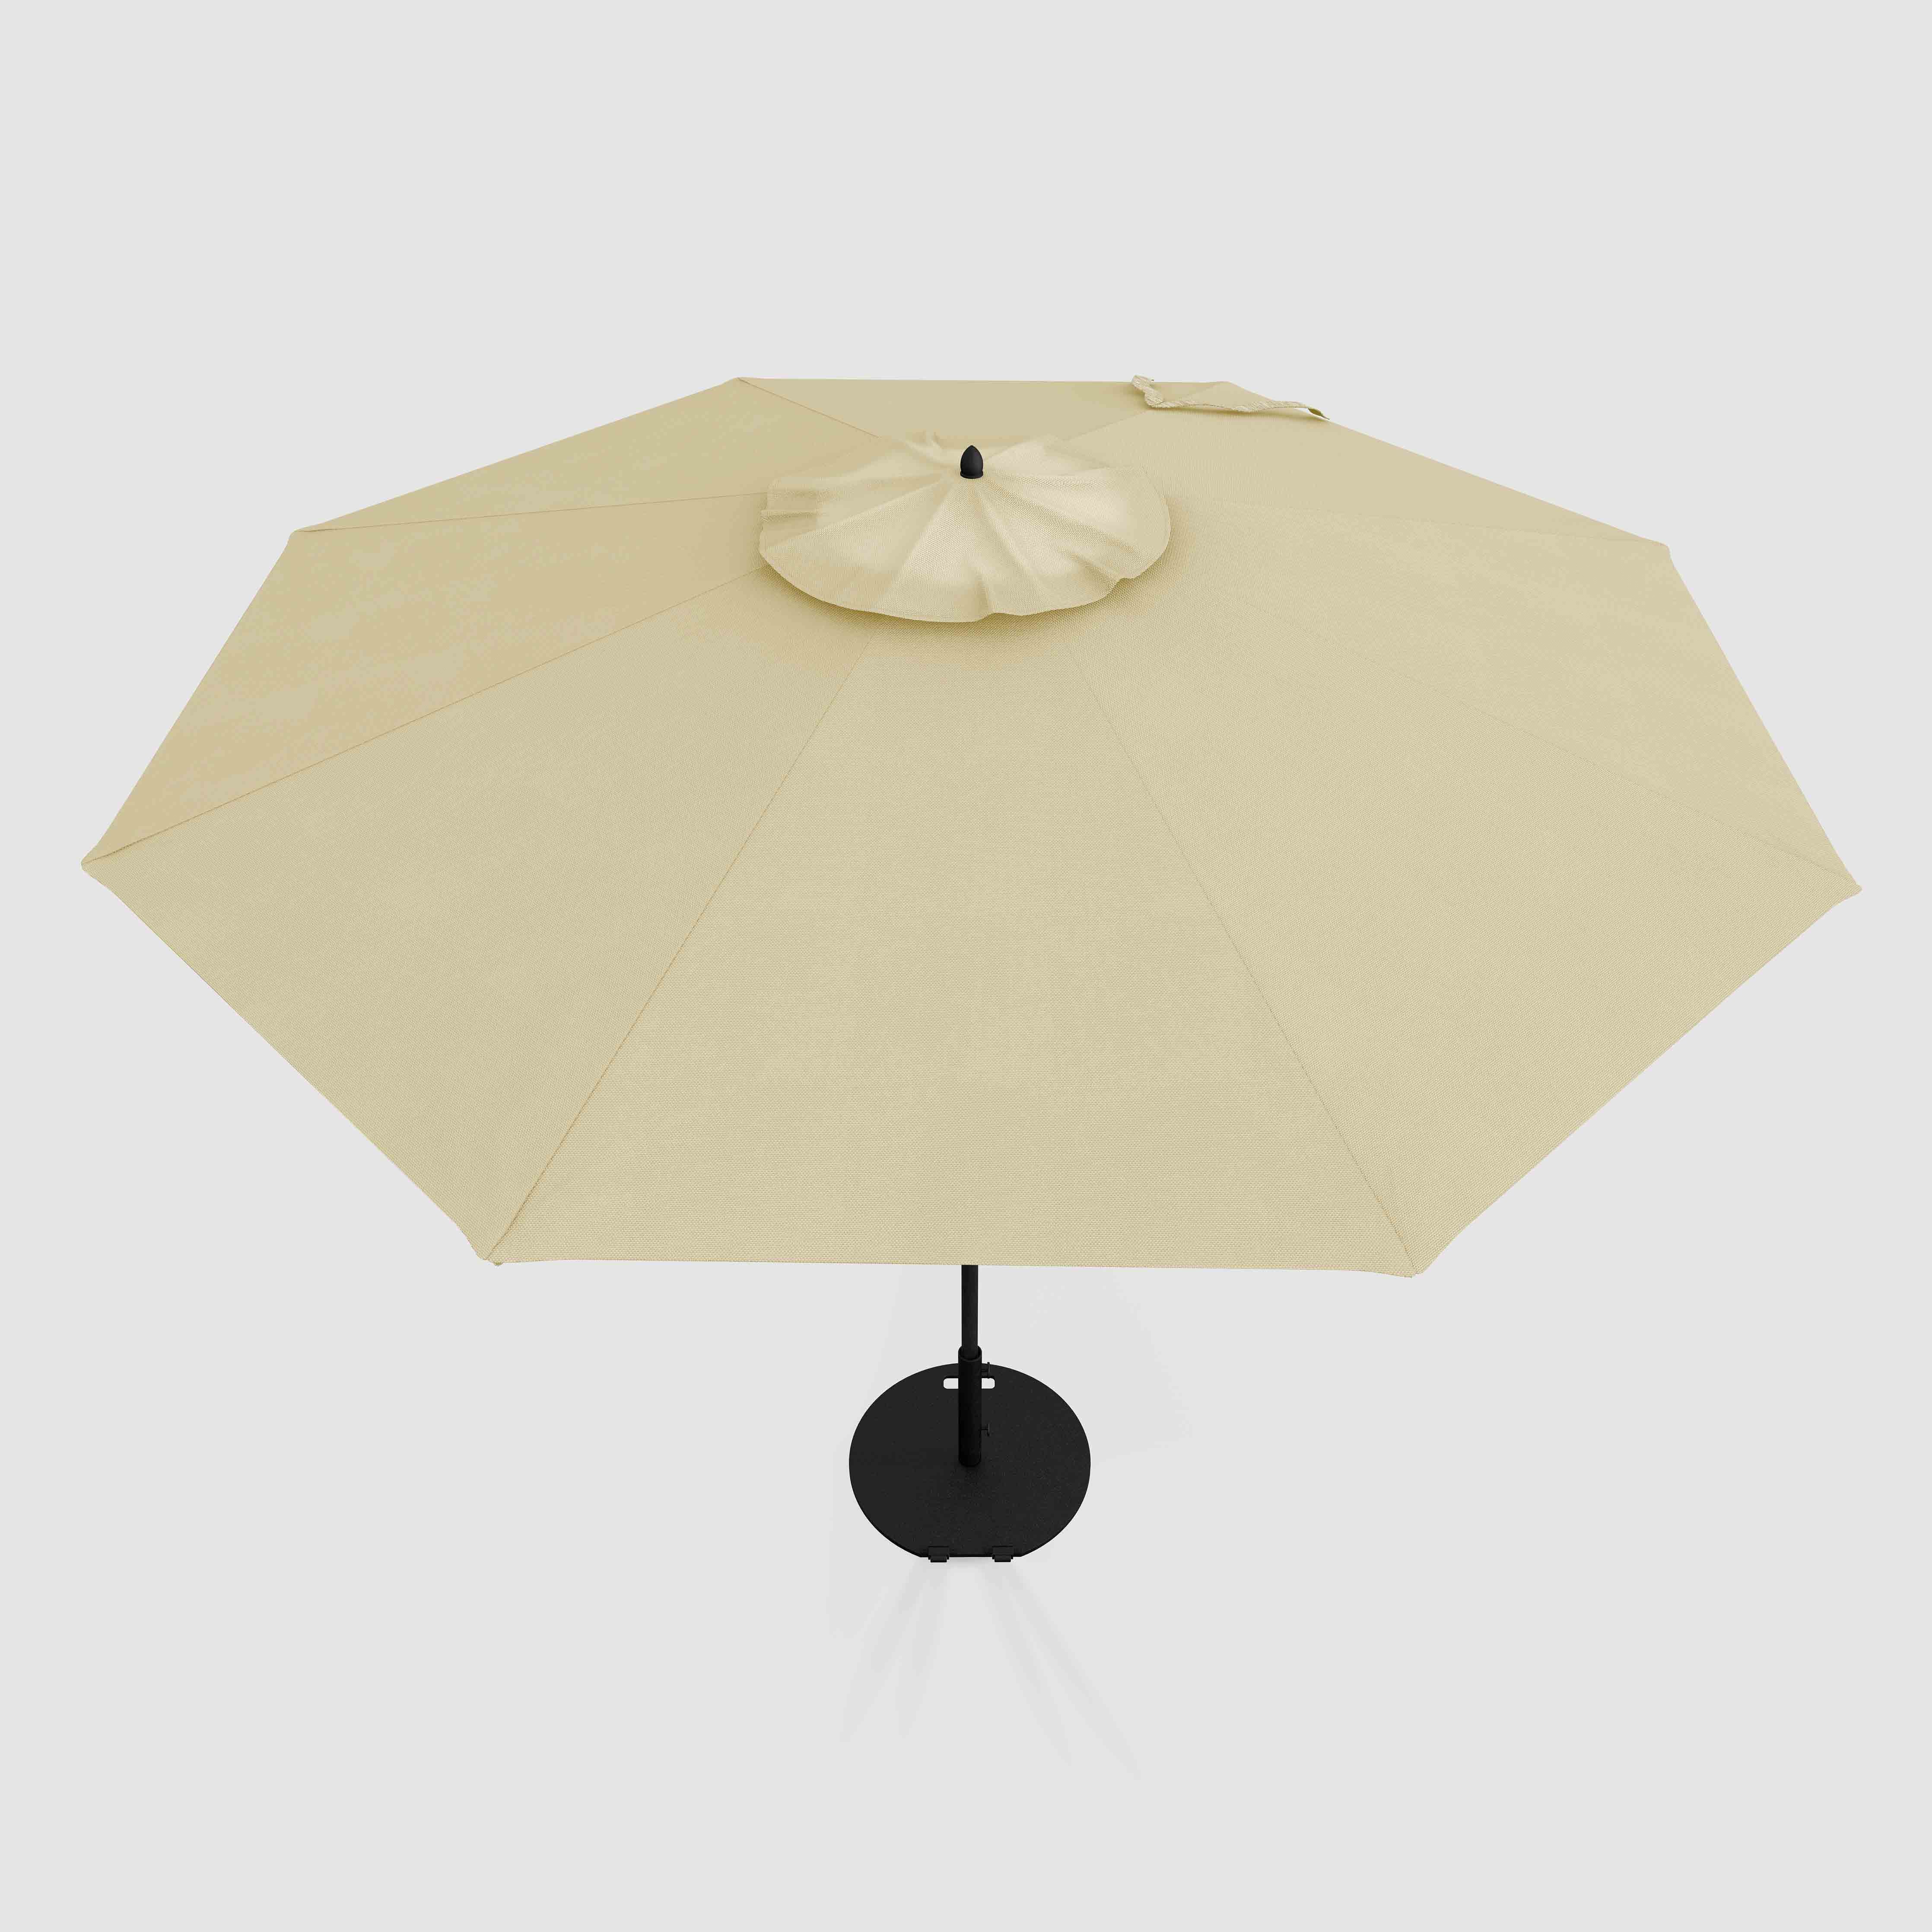 Patio Terylast Umbrellas Durable. Collection: